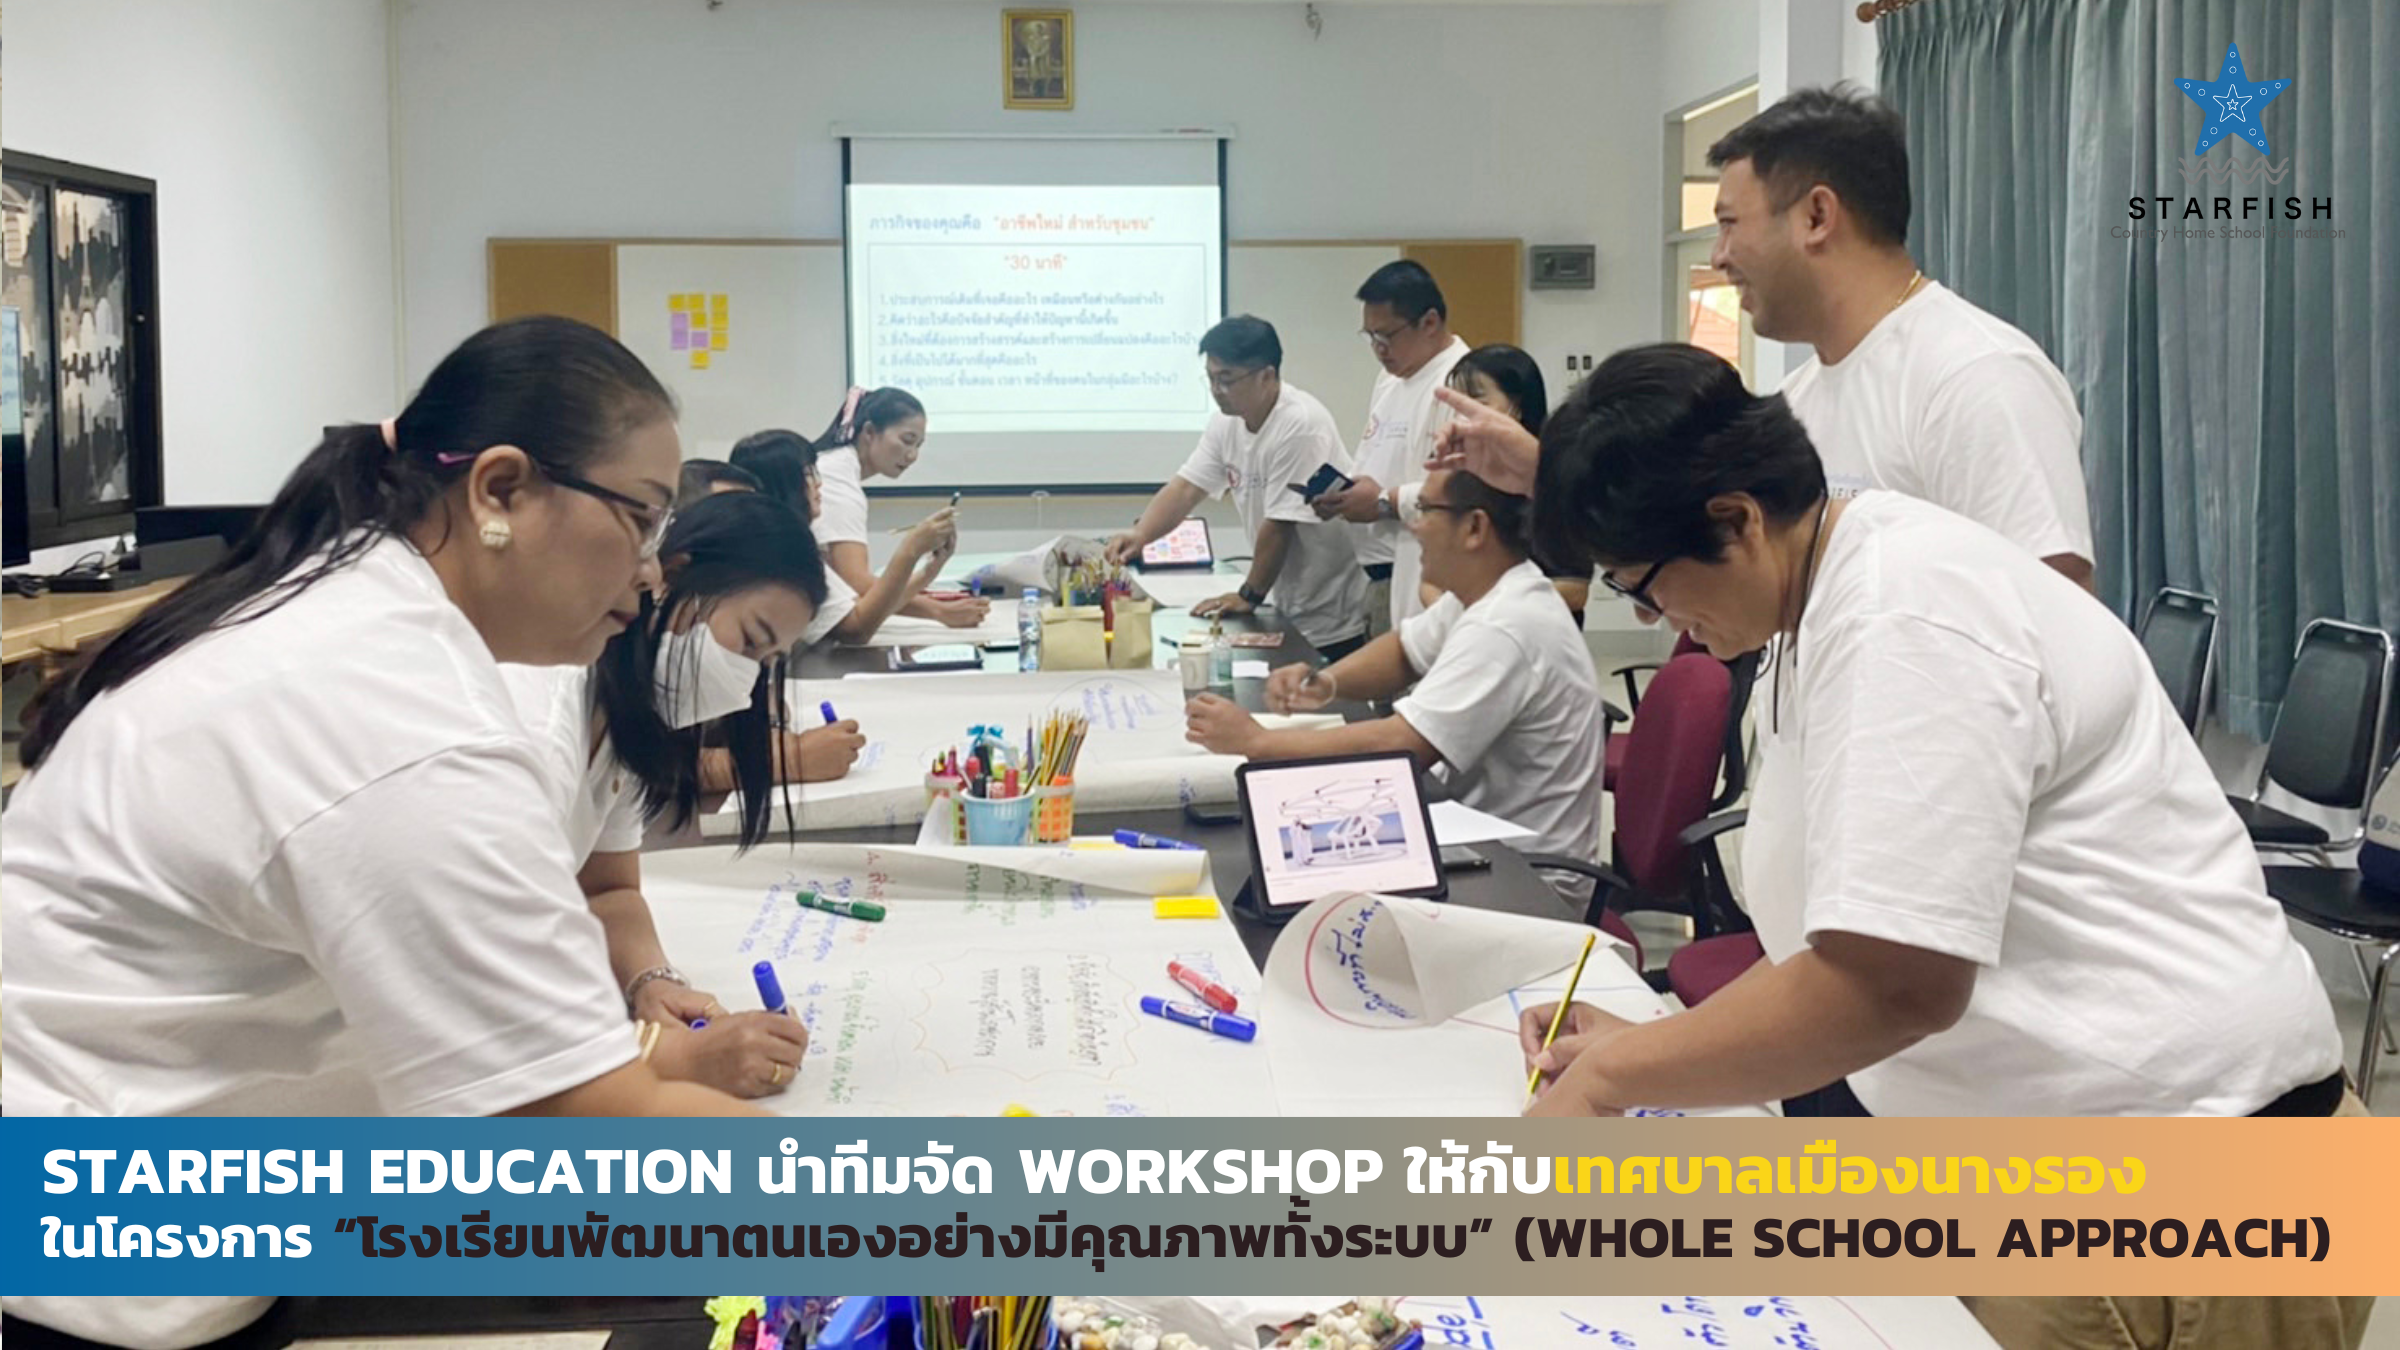 Starfish Education นำทีมจัด Workshop ให้กับเทศบาลเมืองนางรอง ในโครงการ “โรงเรียนพัฒนาตนเองอย่างมีคุณภาพทั้งระบบ” (Whole School Approach)